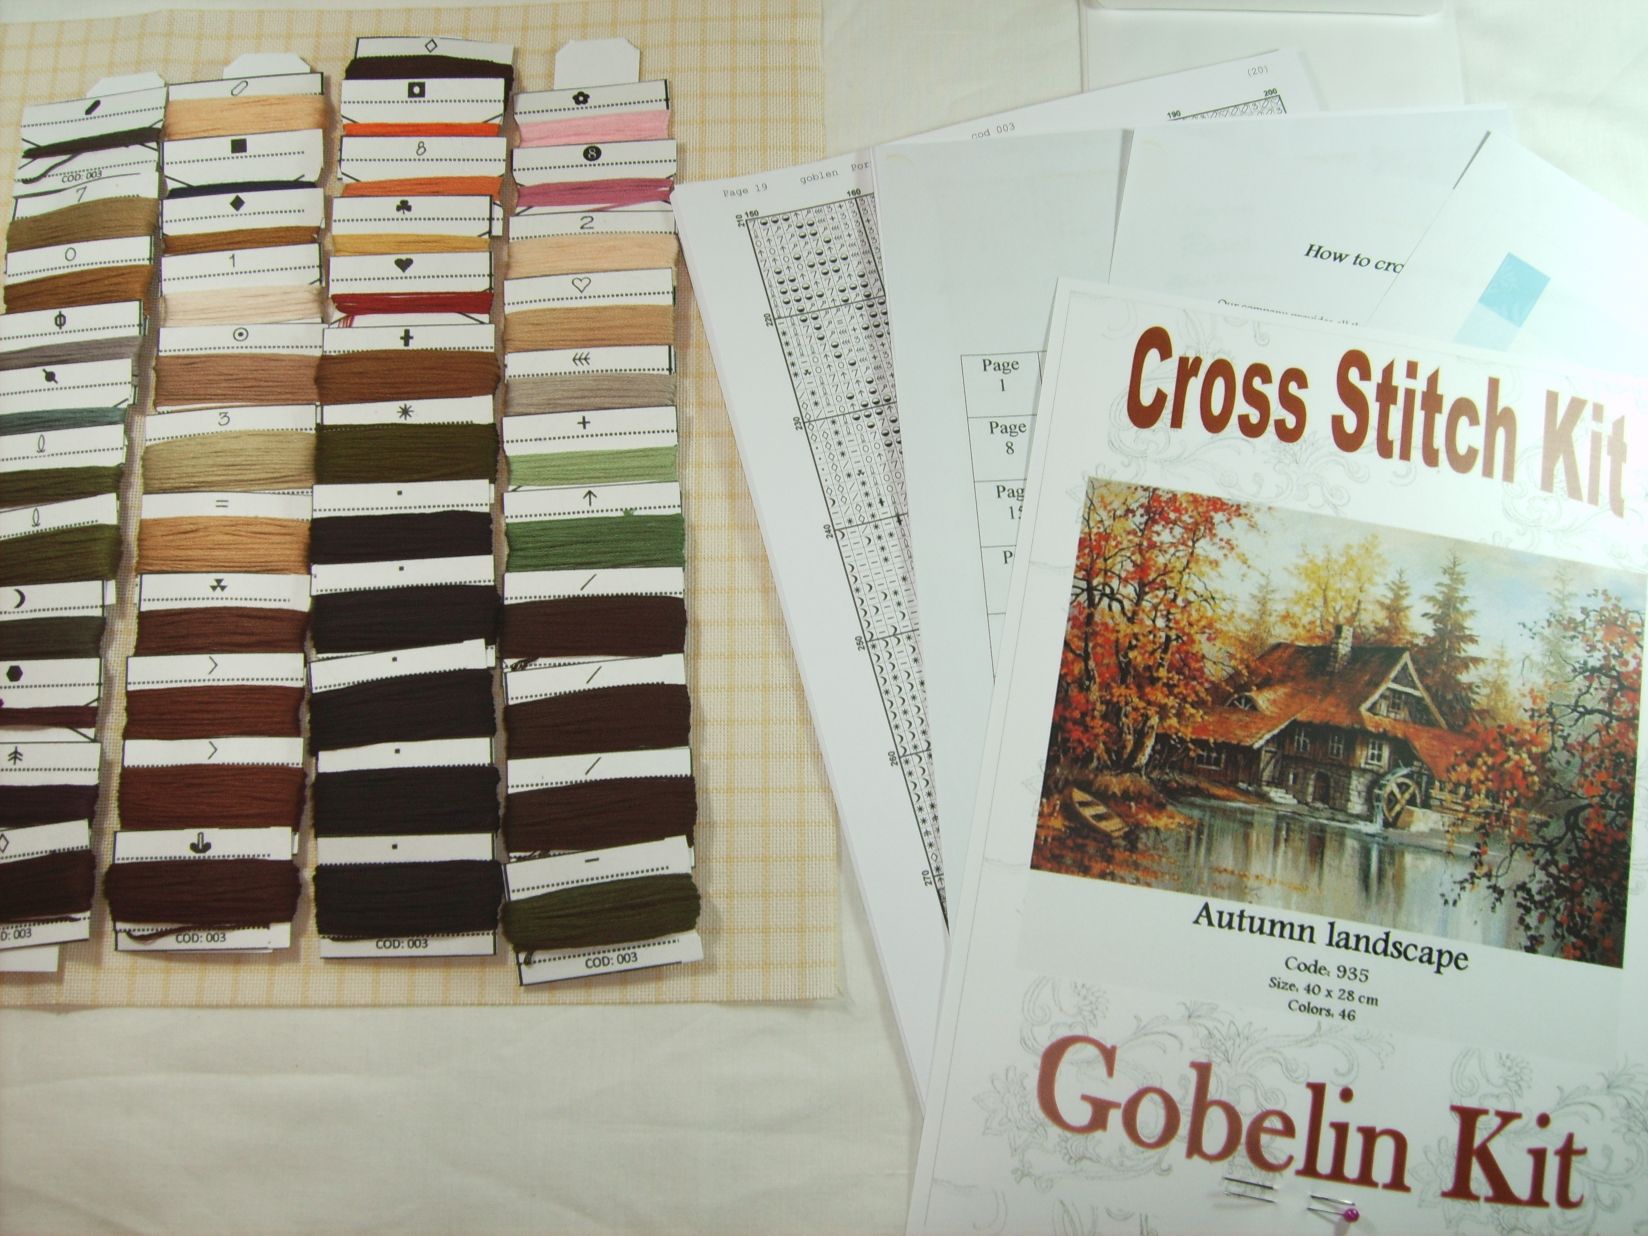 Cross stitch kit elements